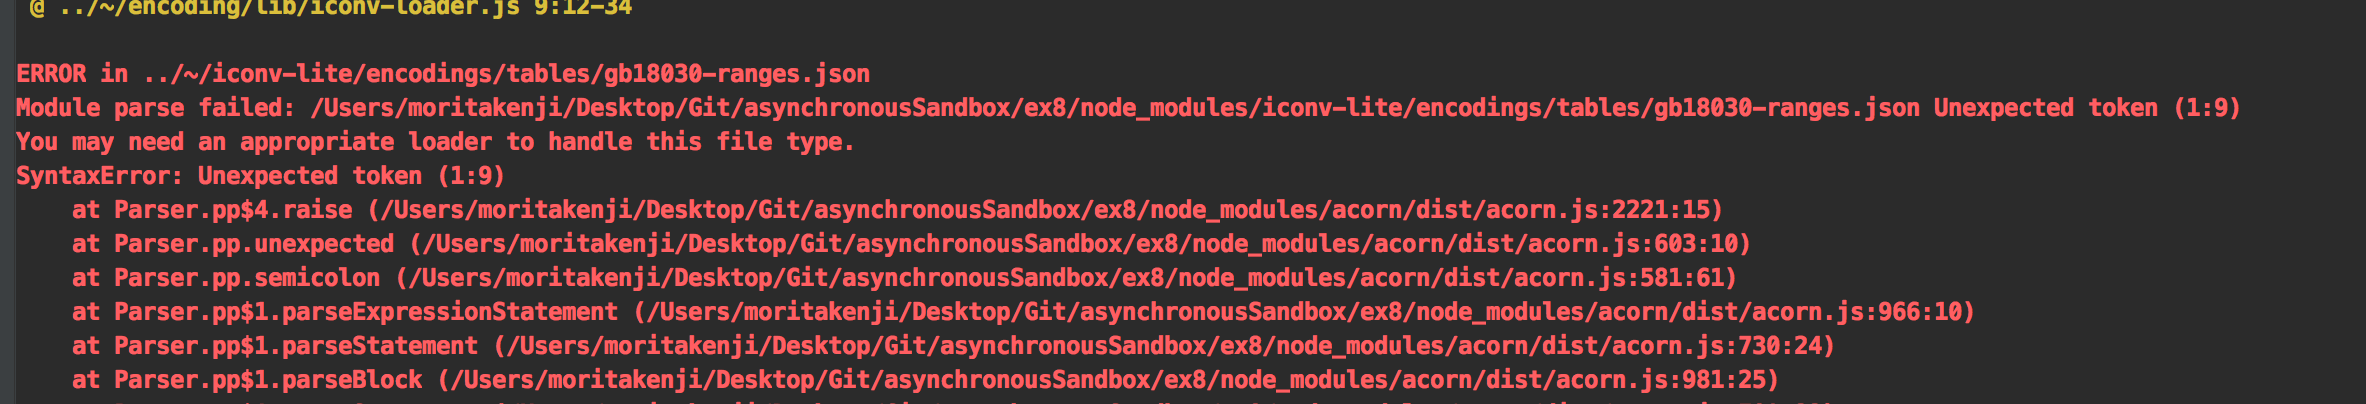 【Webpack/node-fetch】これを解決「ERROR in ../~/iconv-lite/encodings/tables/gb18030-ranges.json」